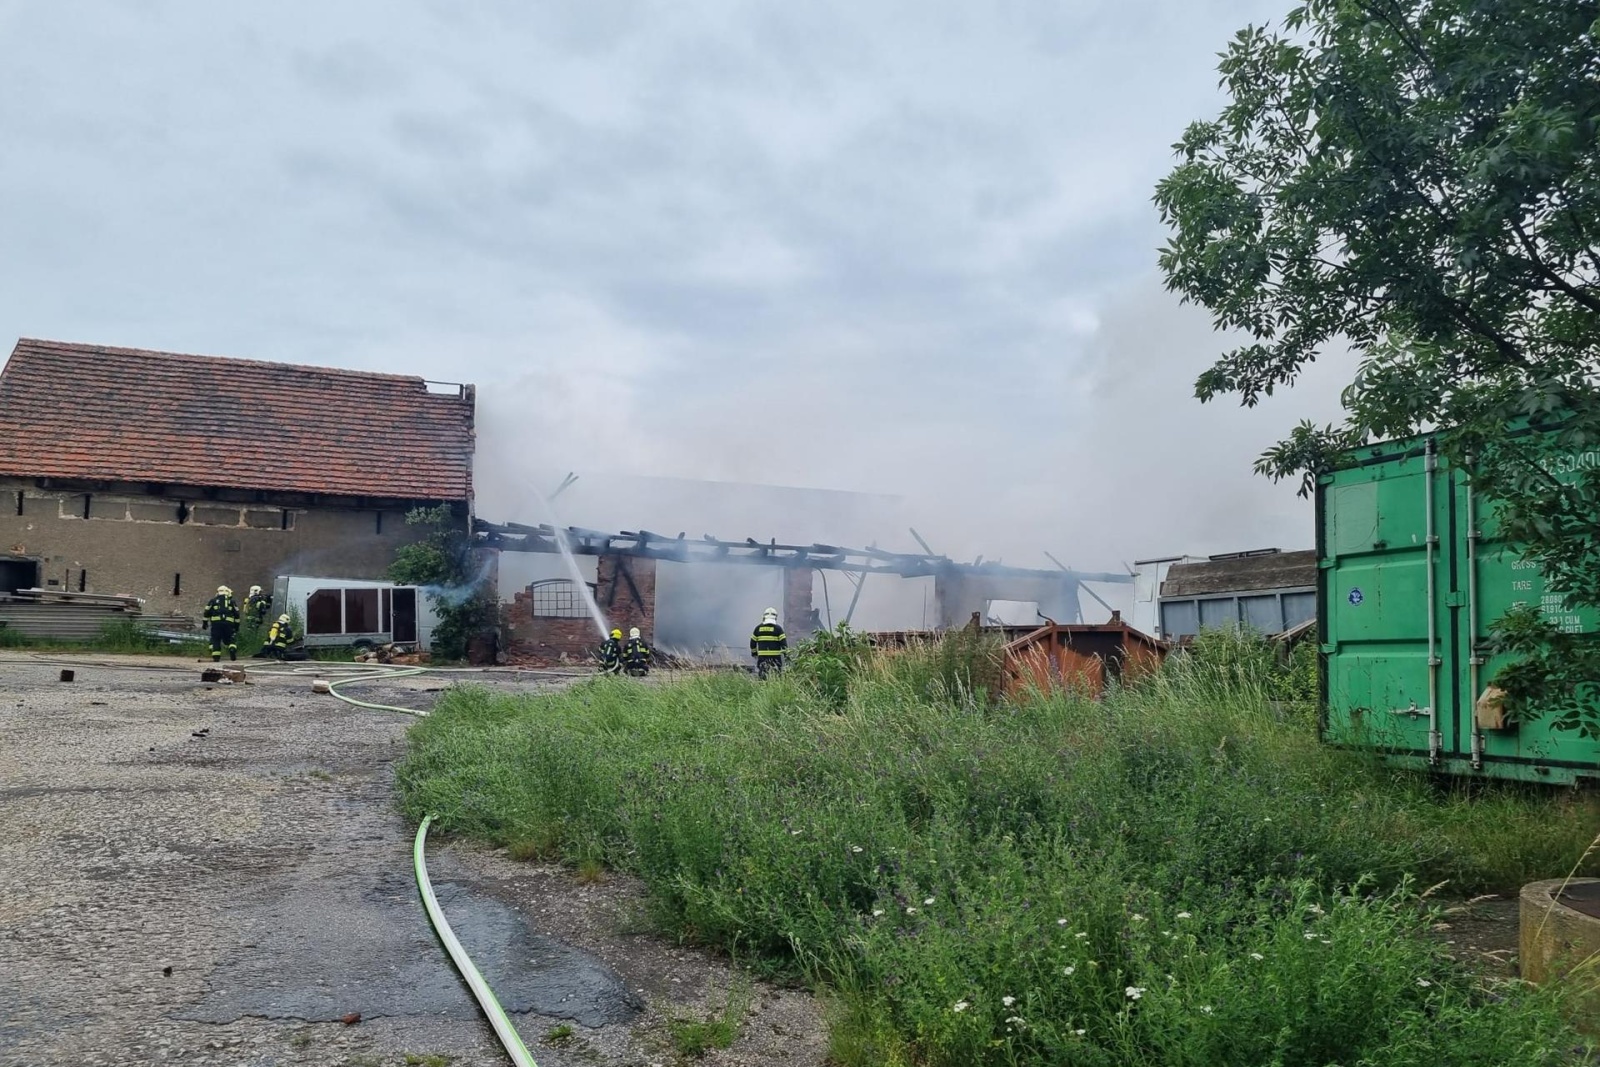 019-Požár výrobny pyrotechniky v obci Praskolesy na Berounsku.jpg